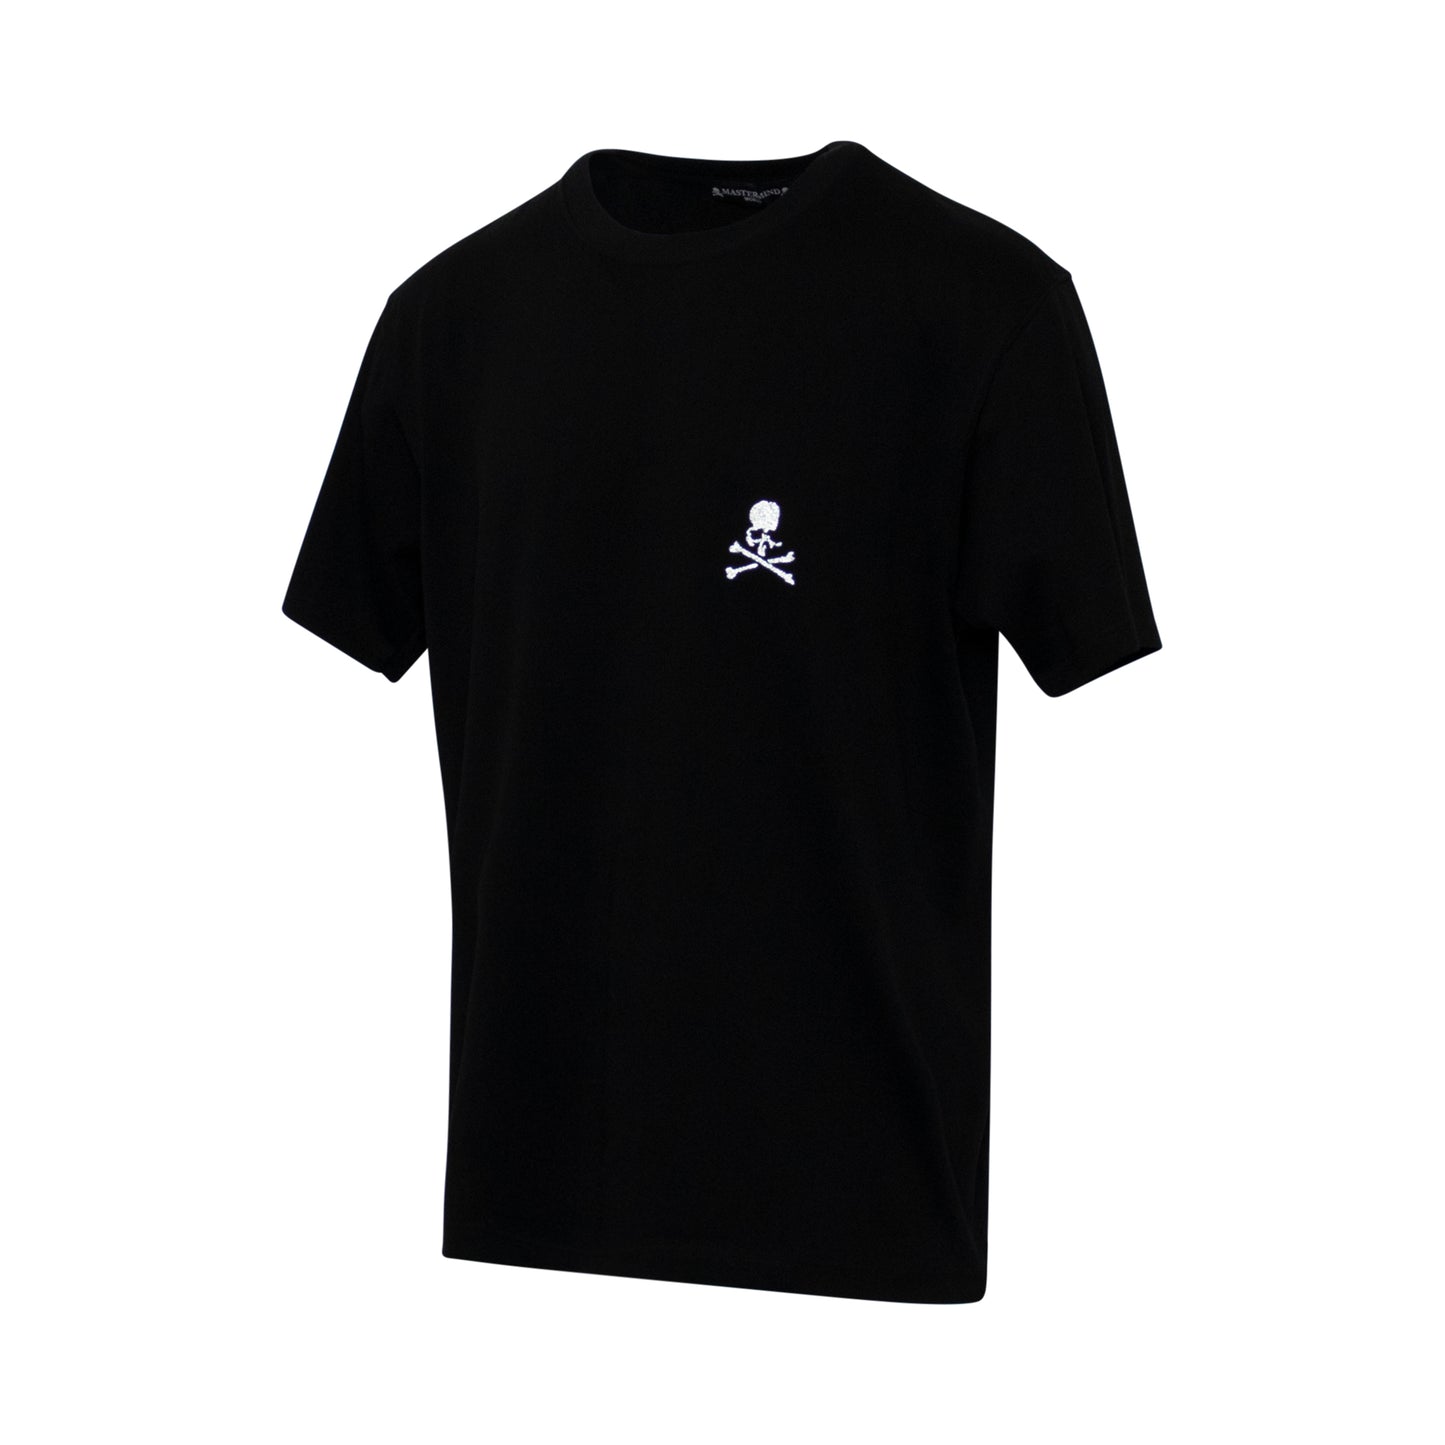 Mastermind World Skull Logo T-Shirt in Black